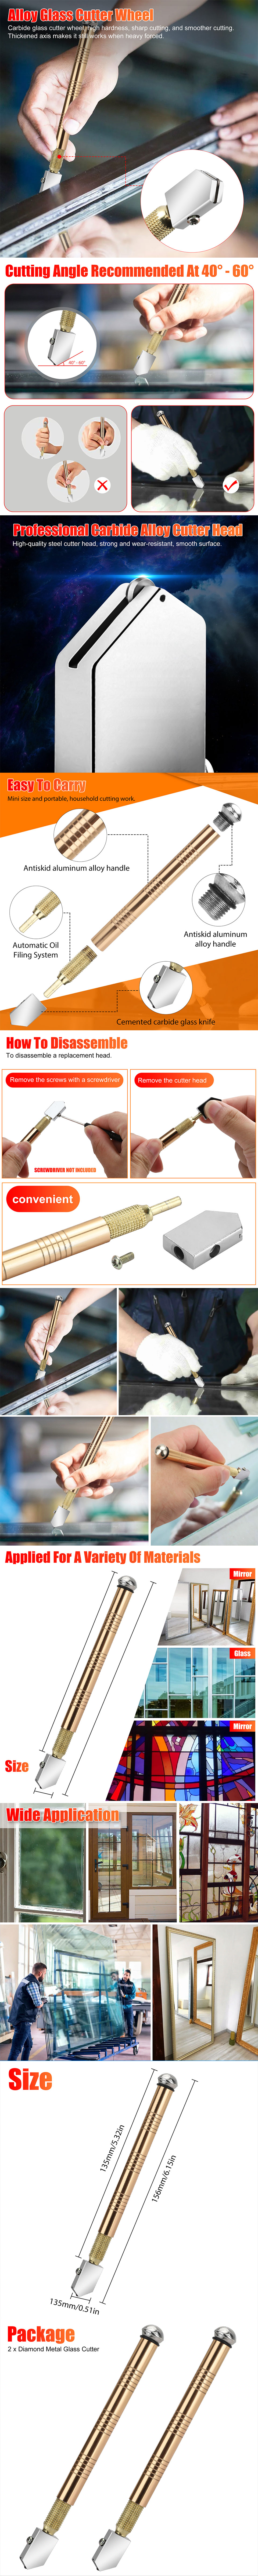 2Pcs Professional Glass Cutter Metal Carbide Precision Anti-Skid Cutting  Tools